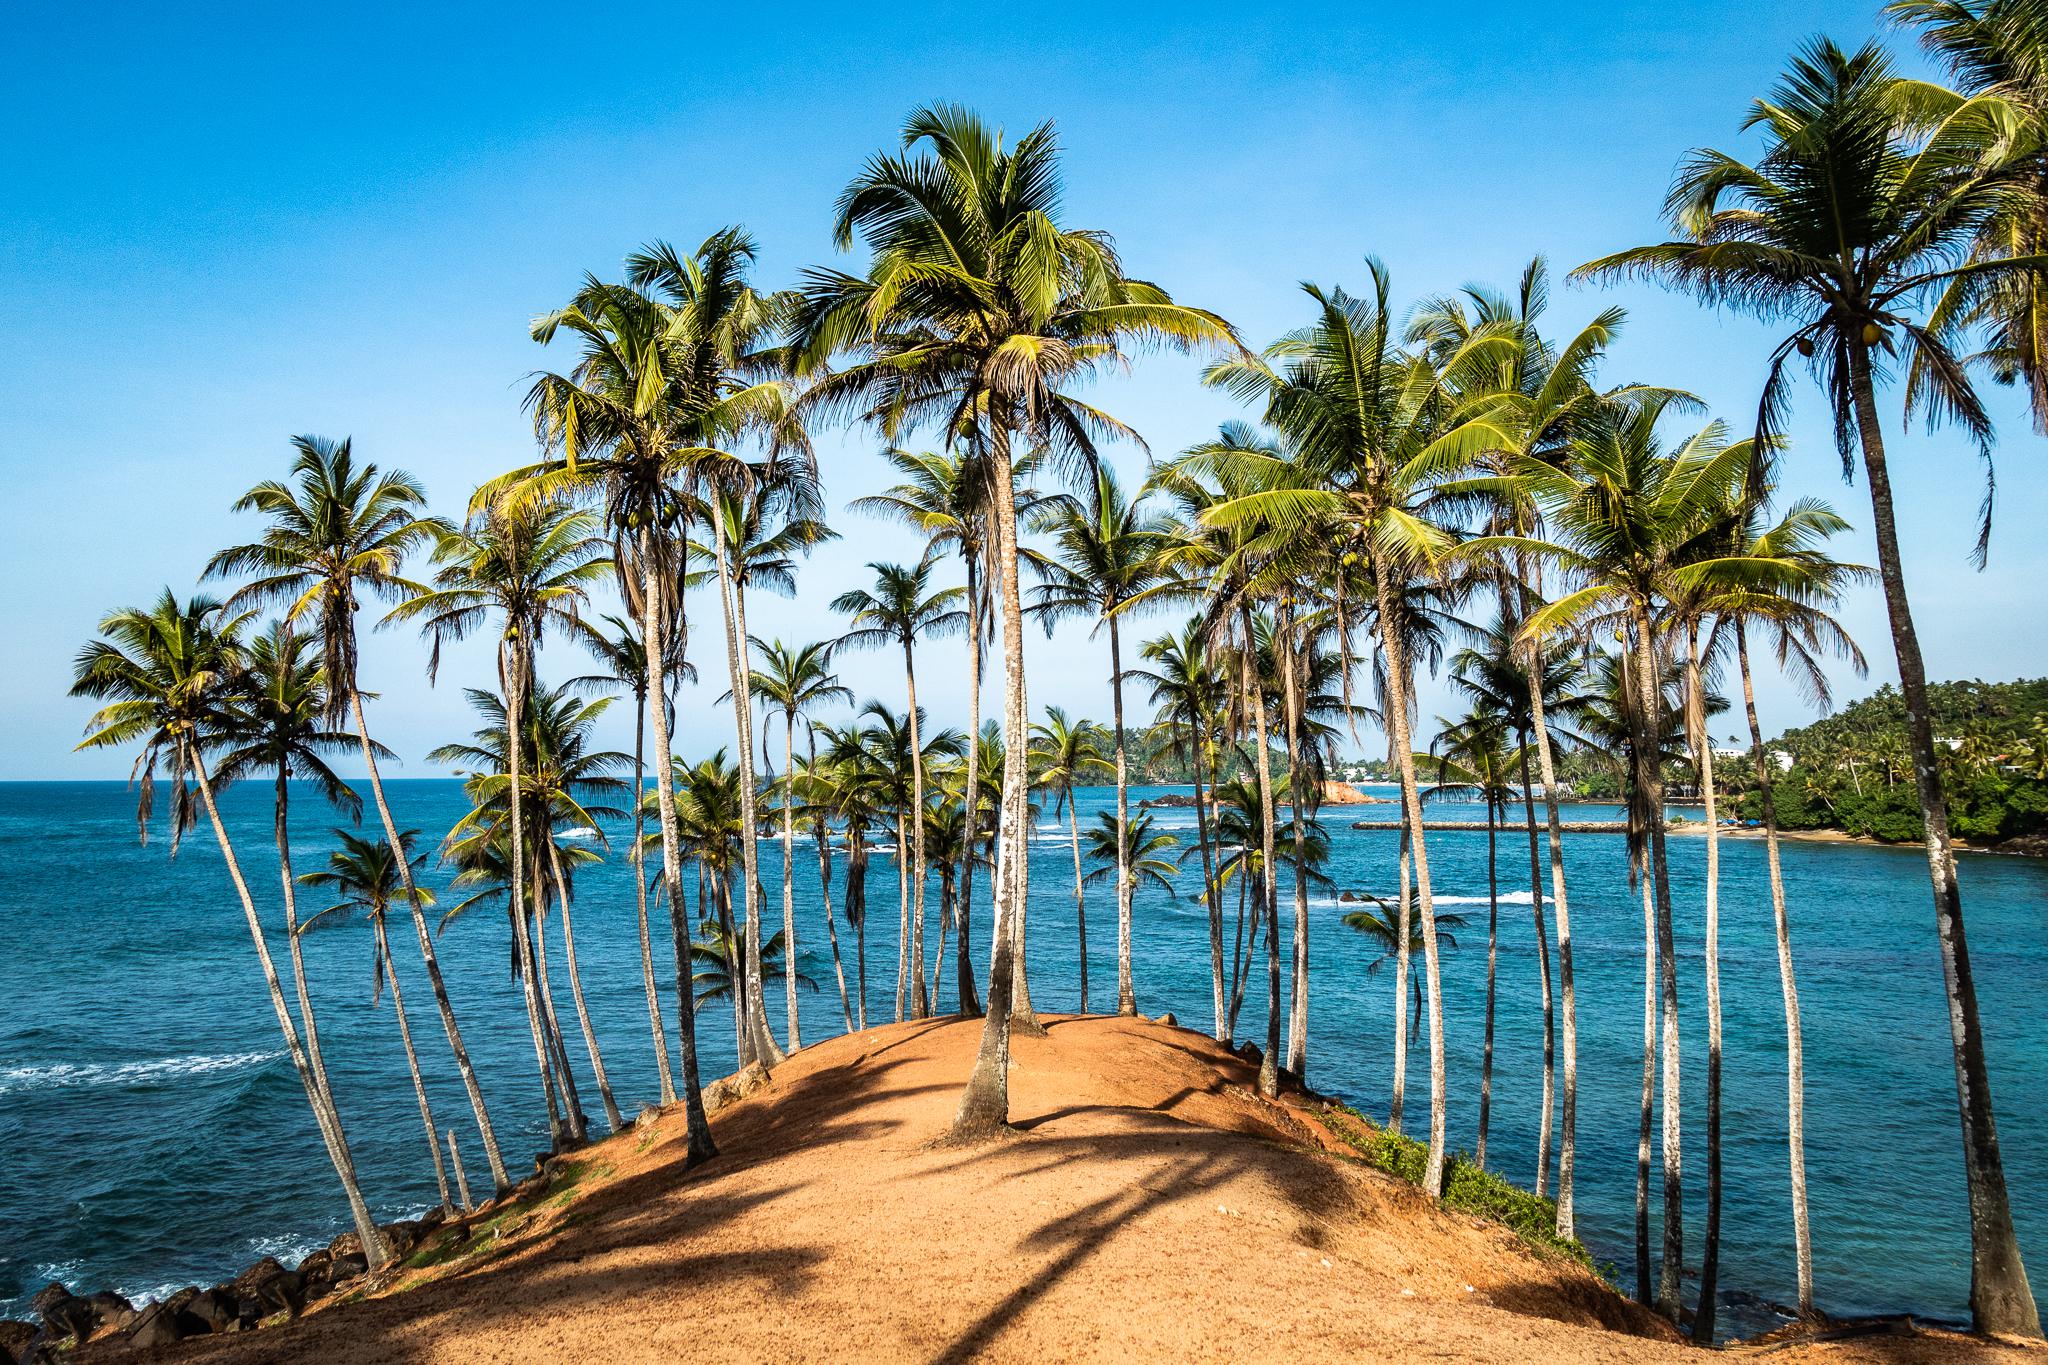 Coconut; A Magical Tree from the Island Sri Lanka